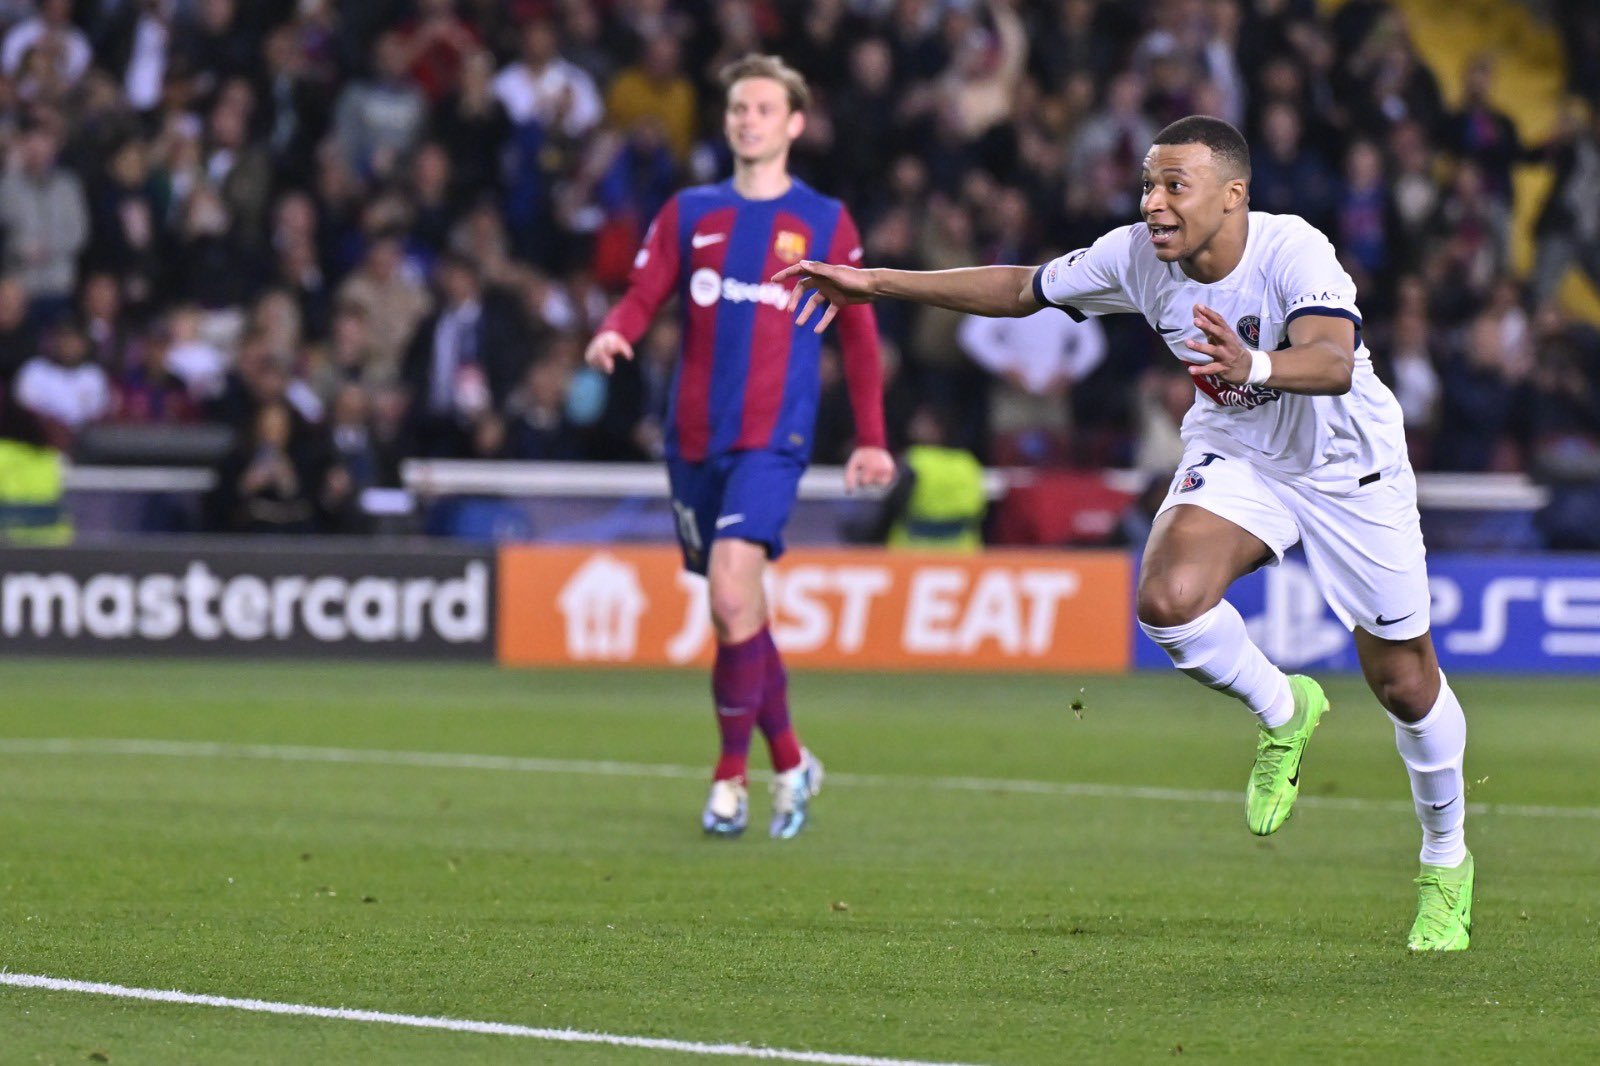 PSG remontó la serie en Montjuic y eliminó al Barcelona en los cuartos de Champions League | Canal Showsport